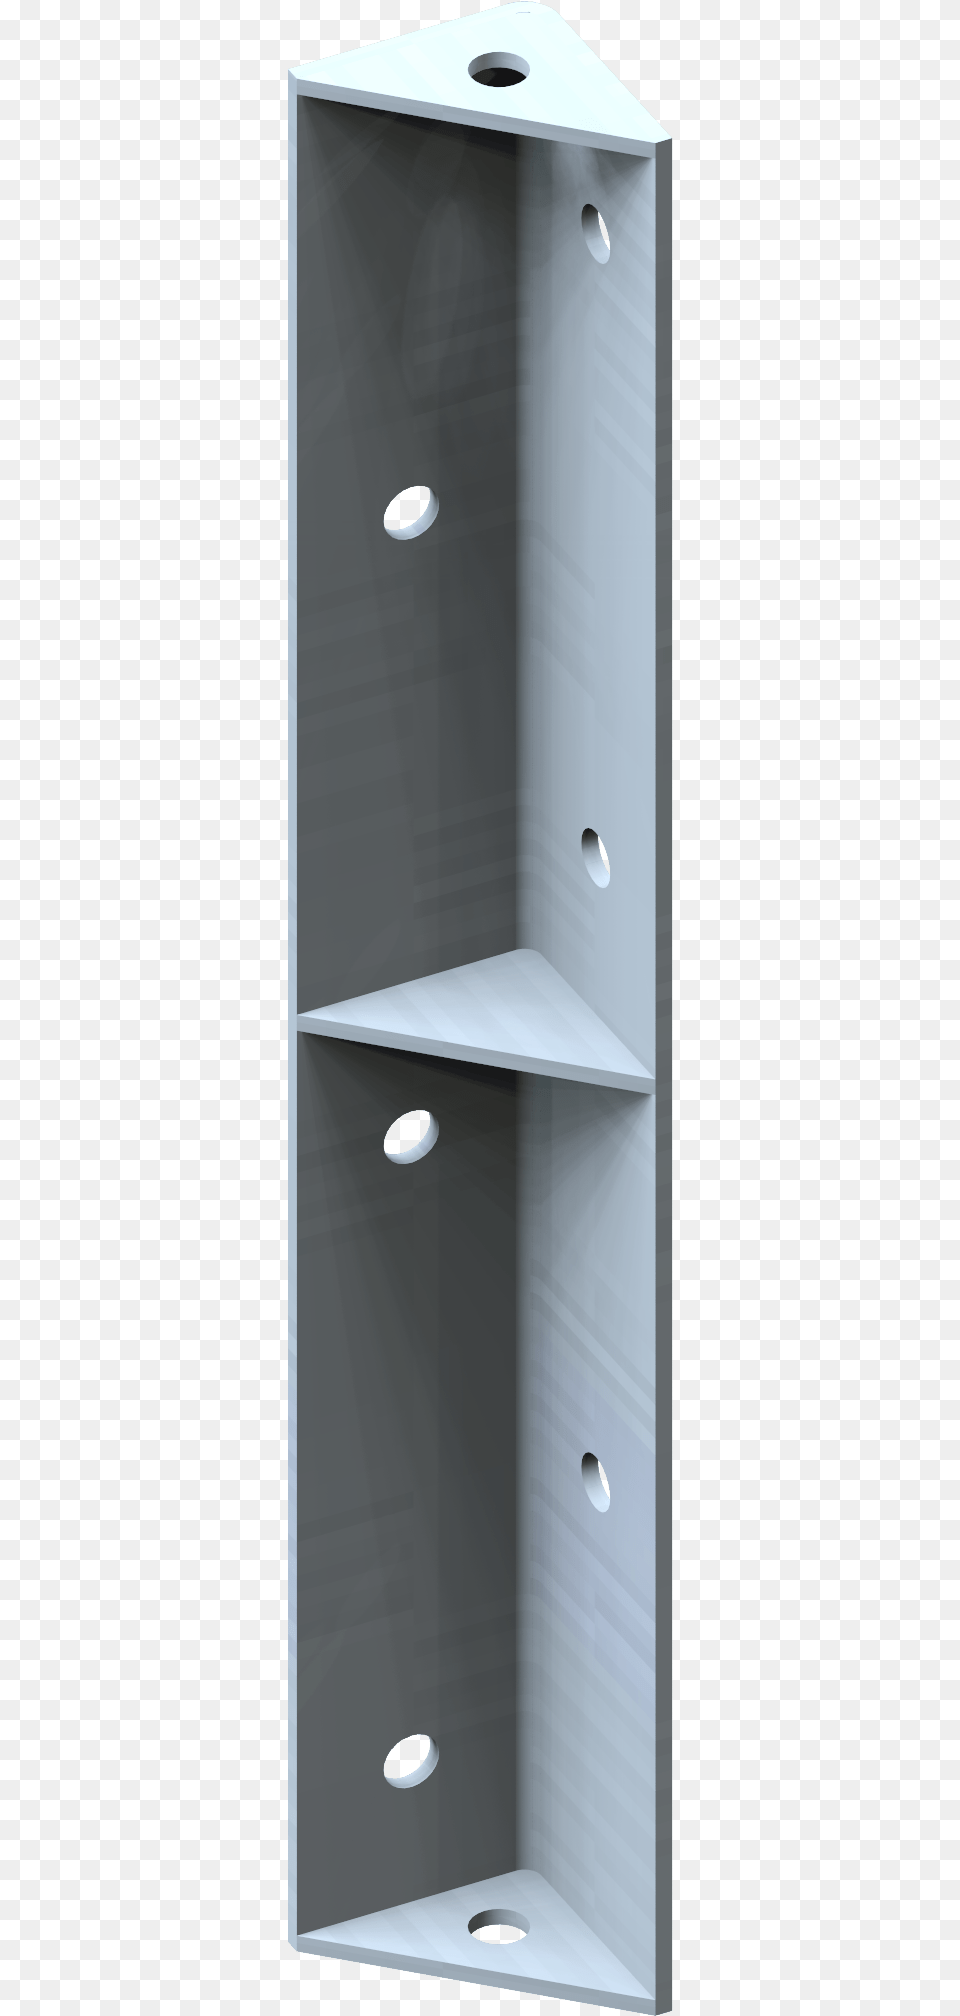 Aluminium Column Corners Home Door, Furniture, Shelf, Cabinet Png Image